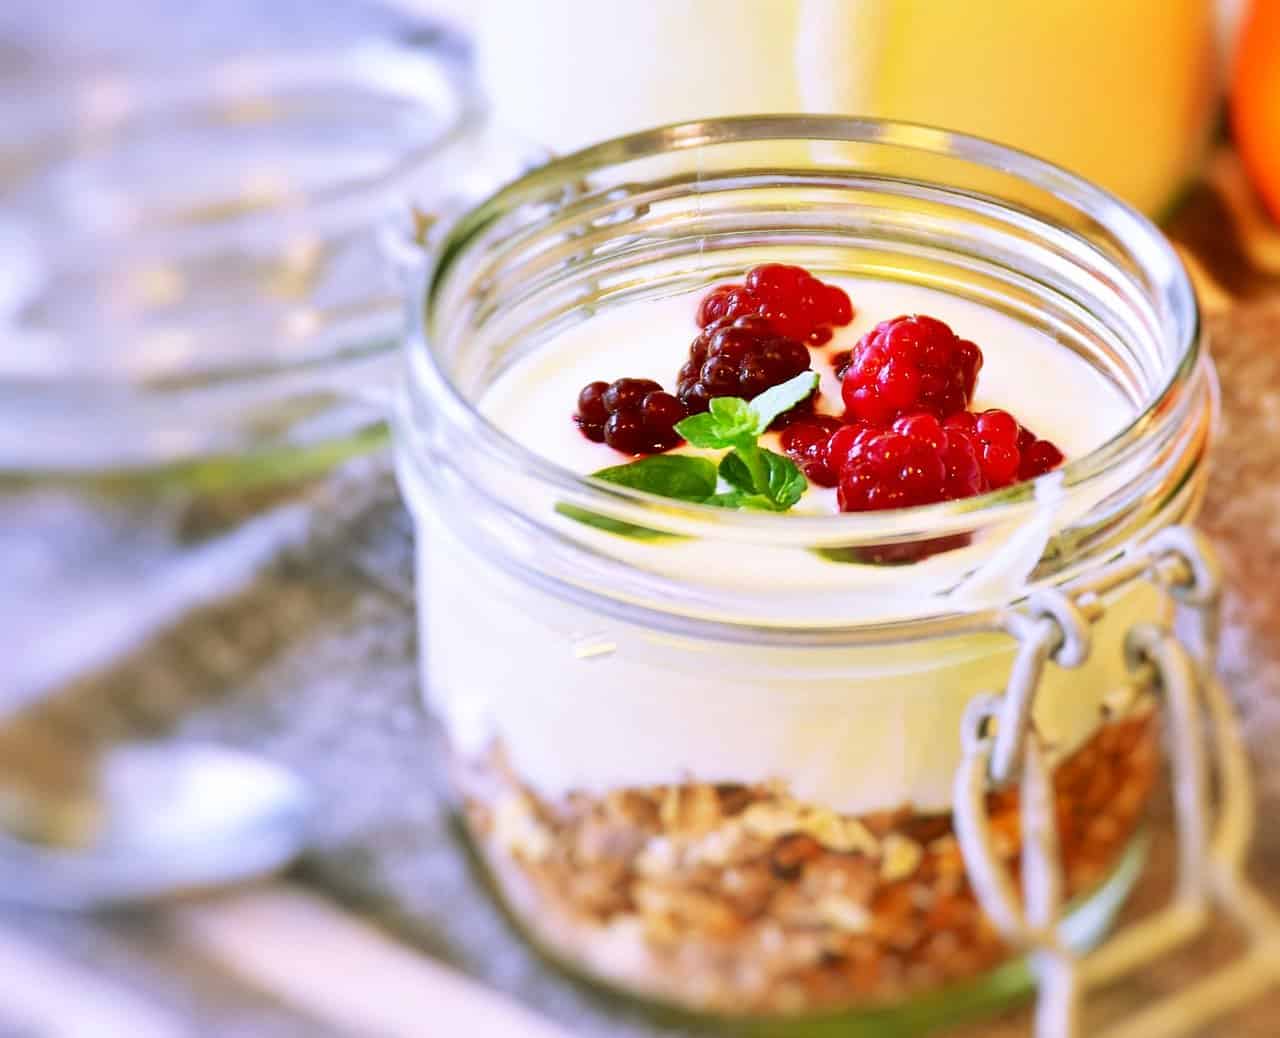 Nutritional Facts Of Greek Yogurt Prove Its High Quality